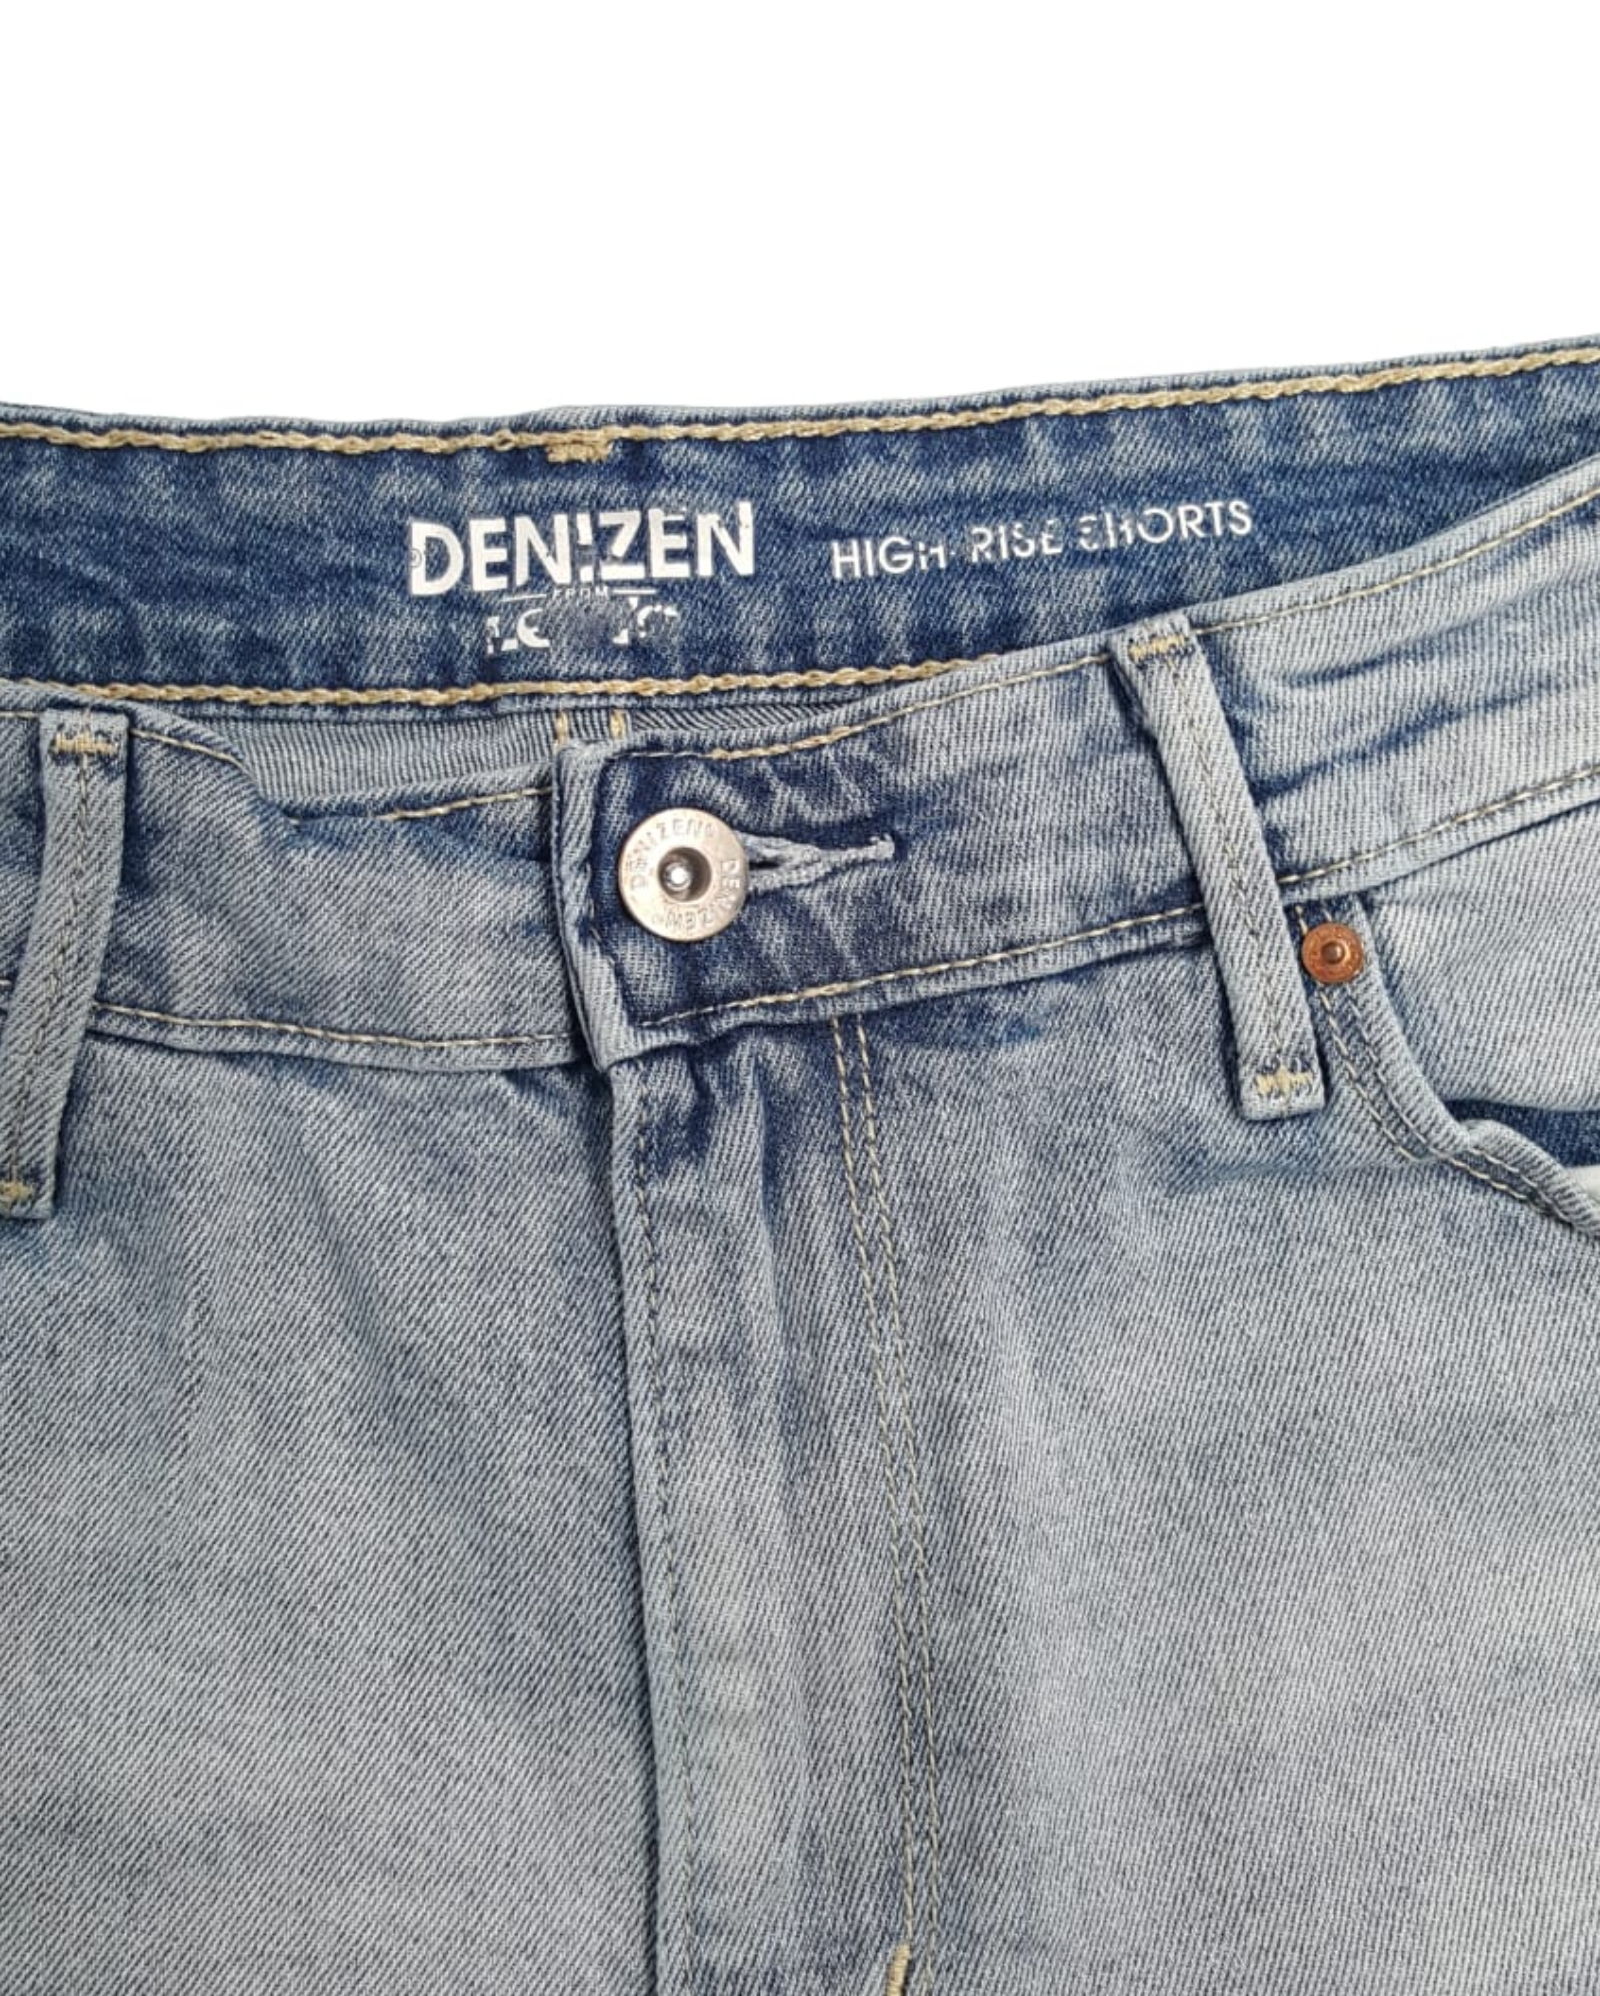 Shorts Jeans Denizen